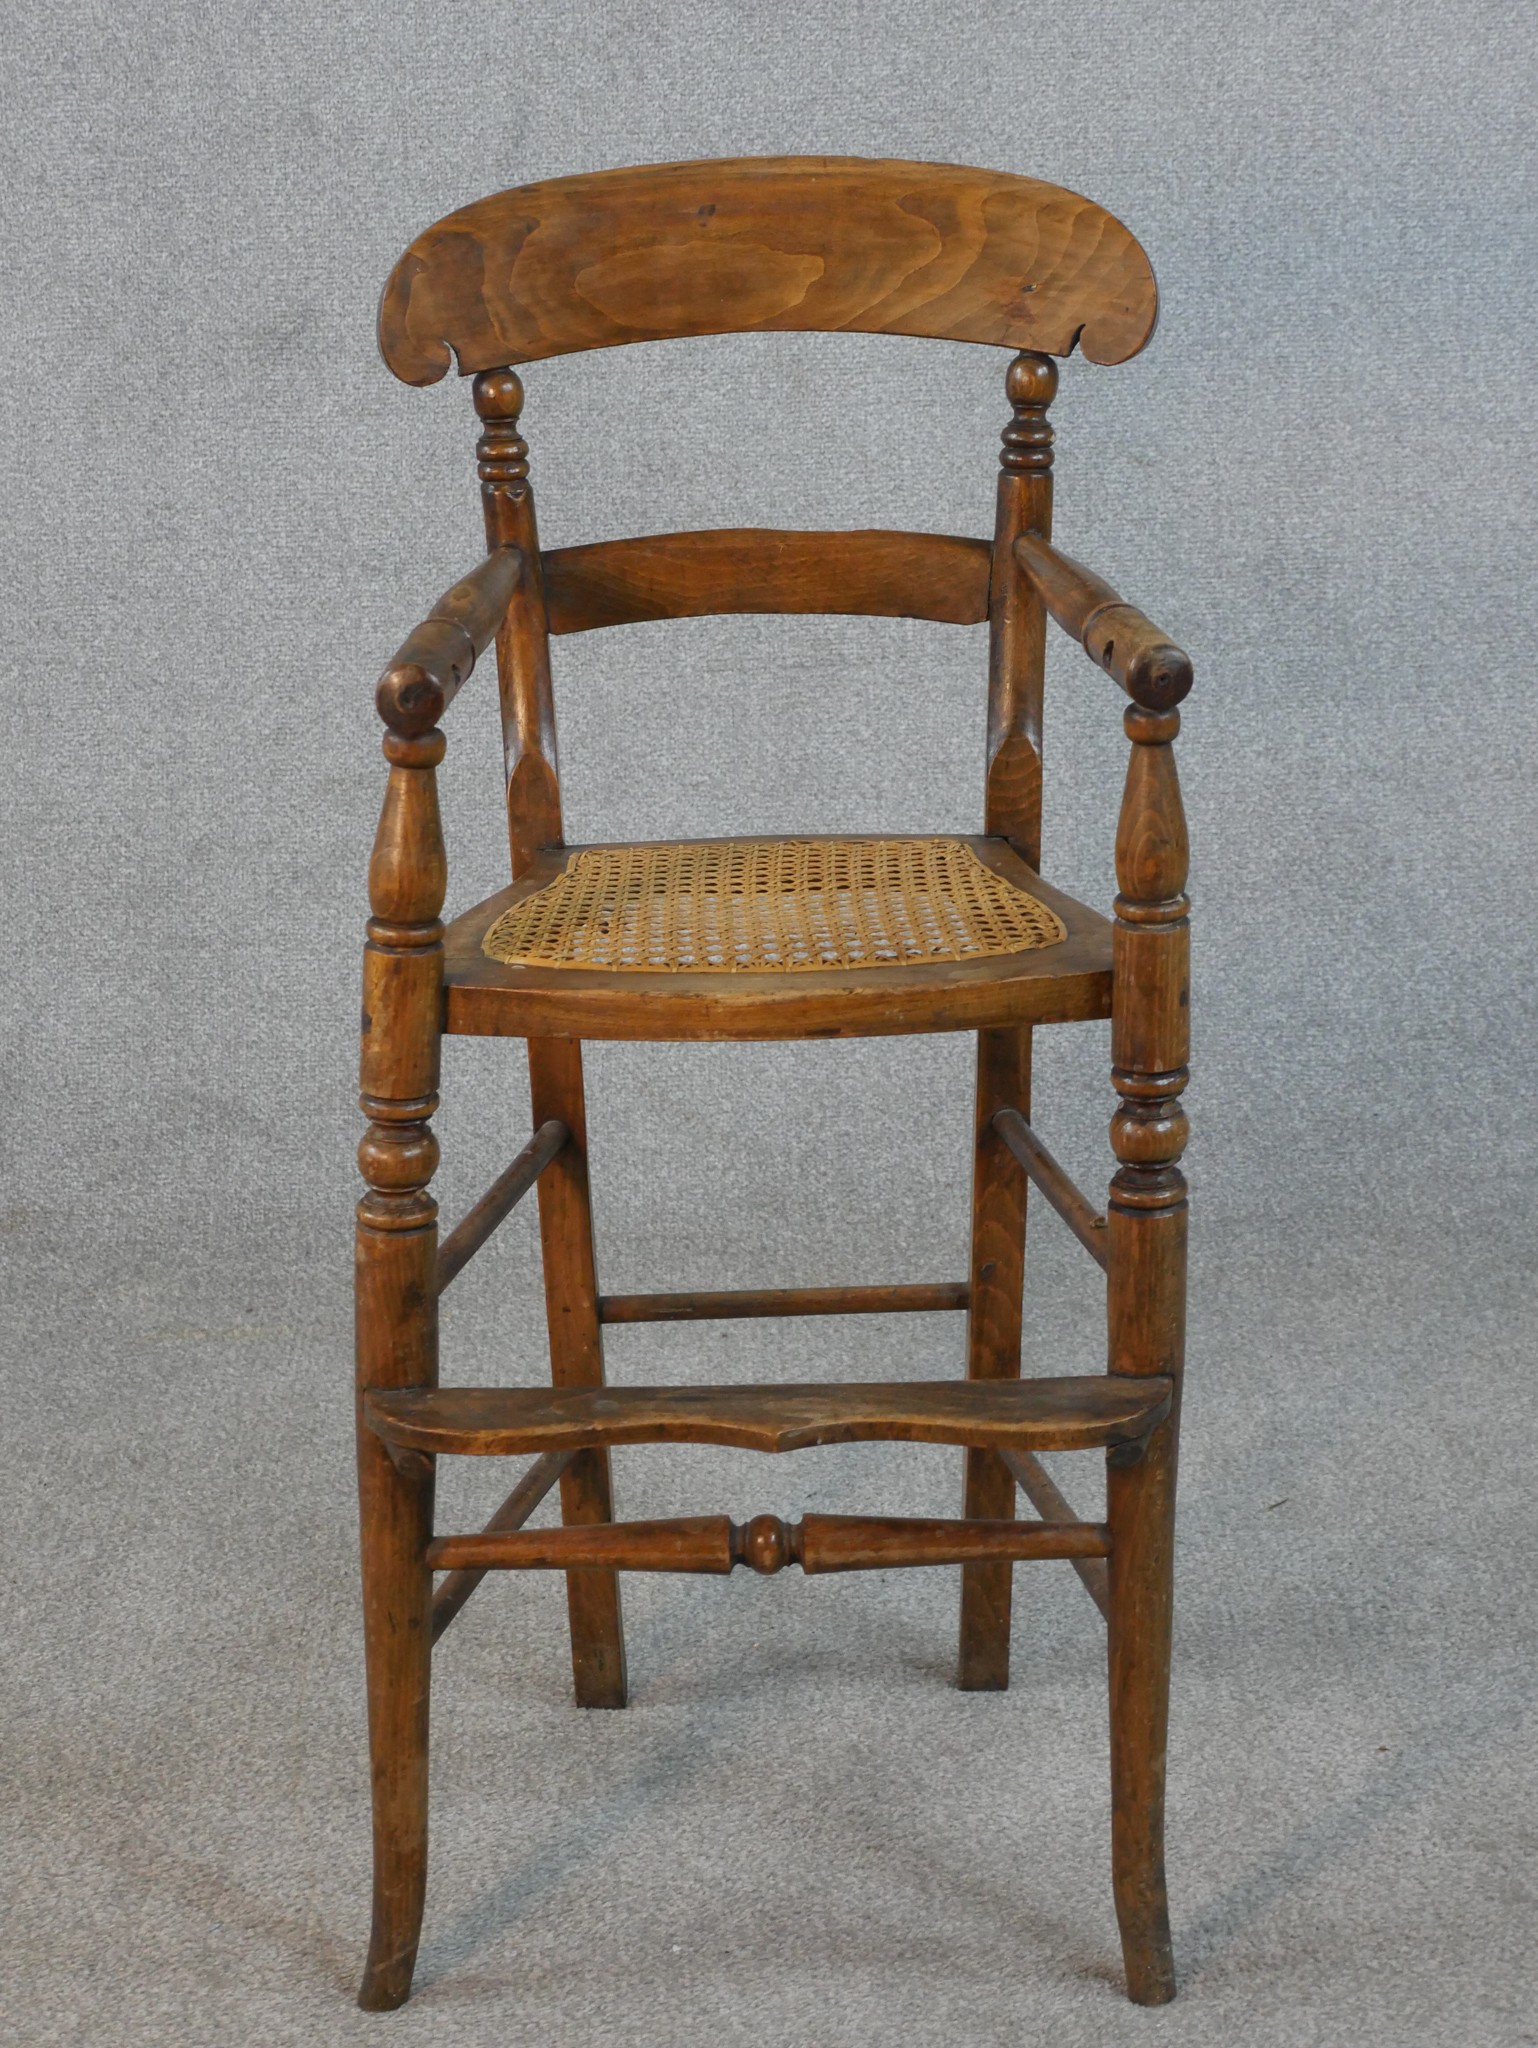 A 19th century beech child's high chair.